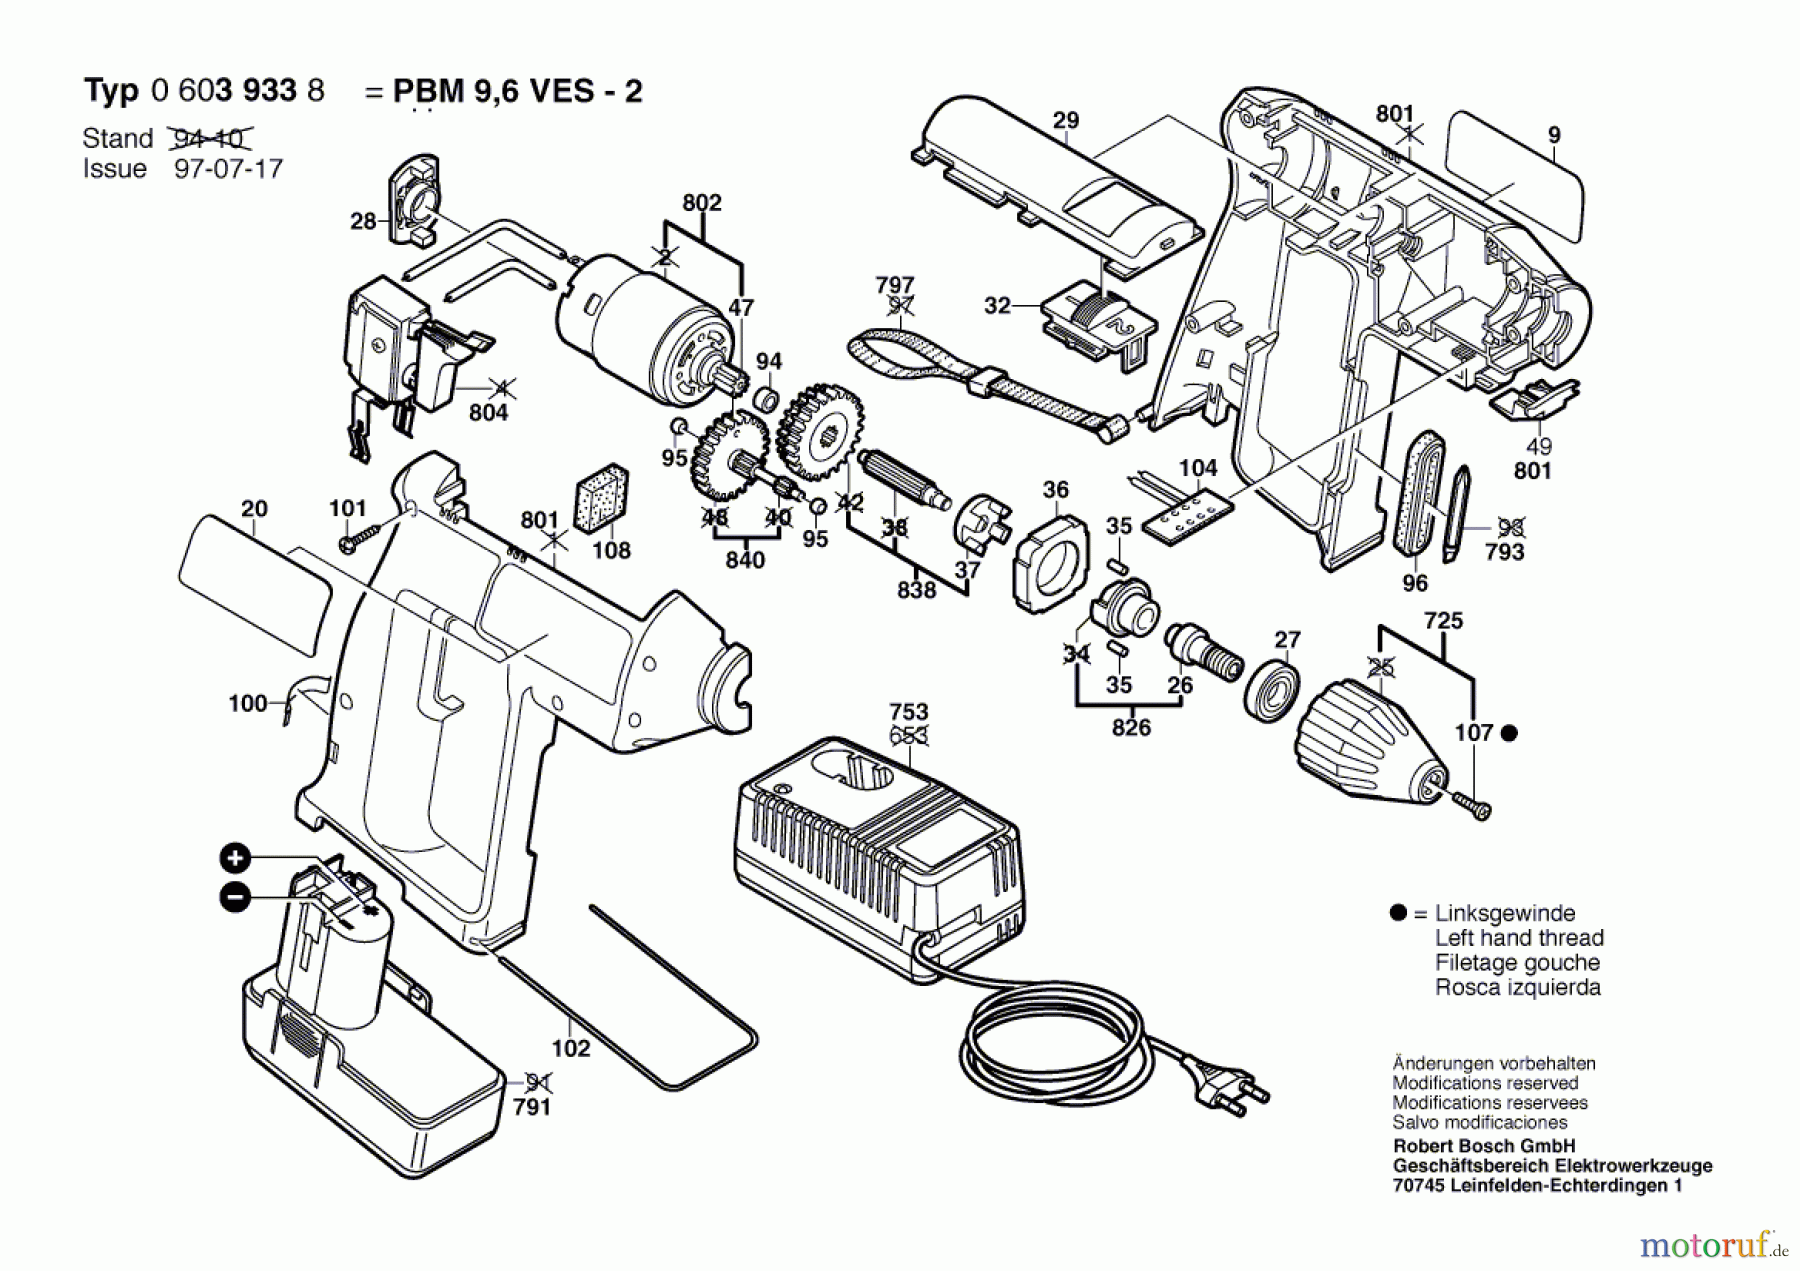  Bosch Akku Werkzeug Akku-Bohrmaschine PBM 9,6 VES-2 Seite 1